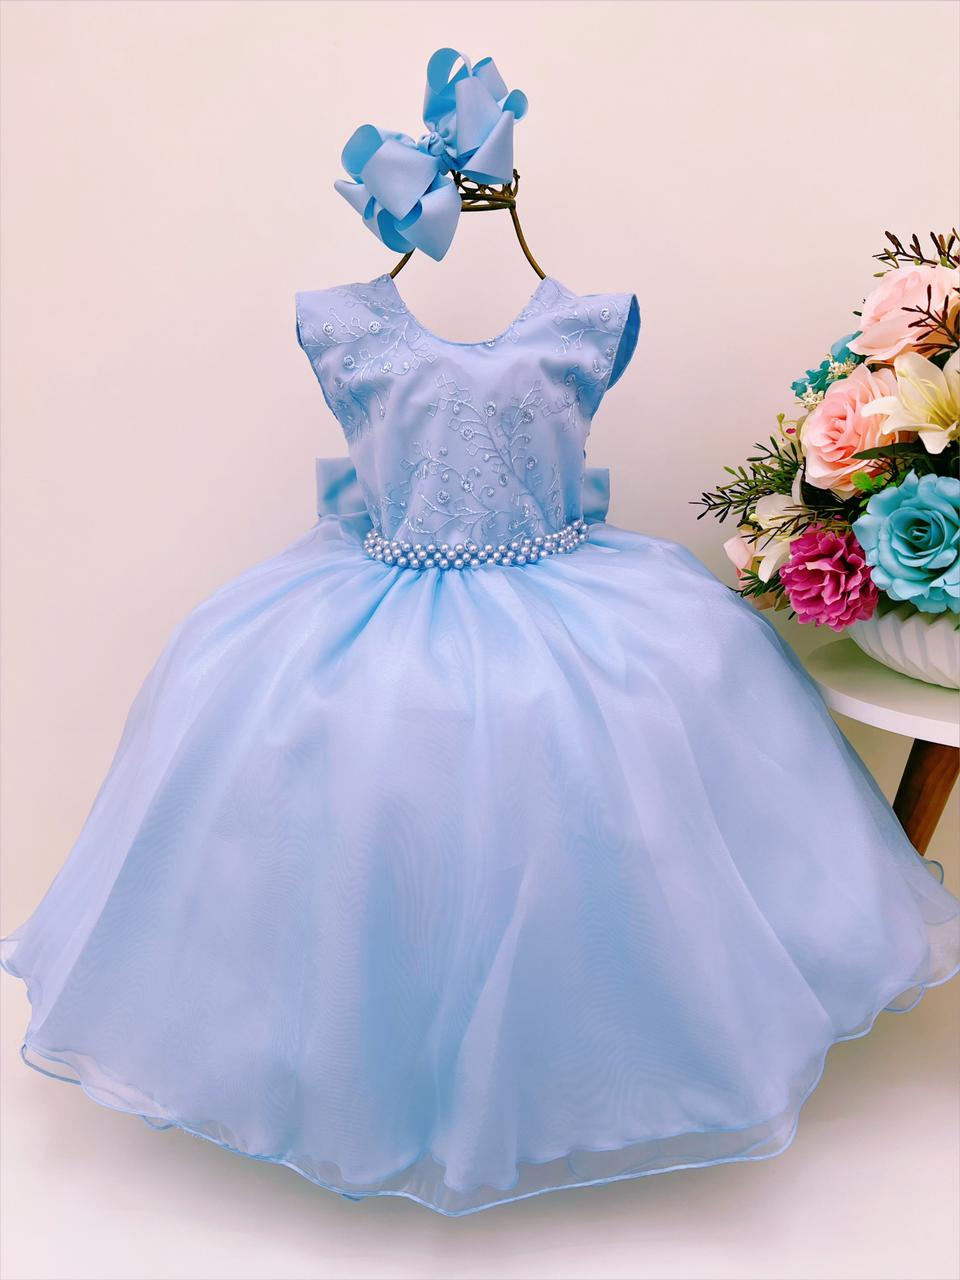 Vestido Infantil Azul Batizado Renda Voal Cinto Pérolas